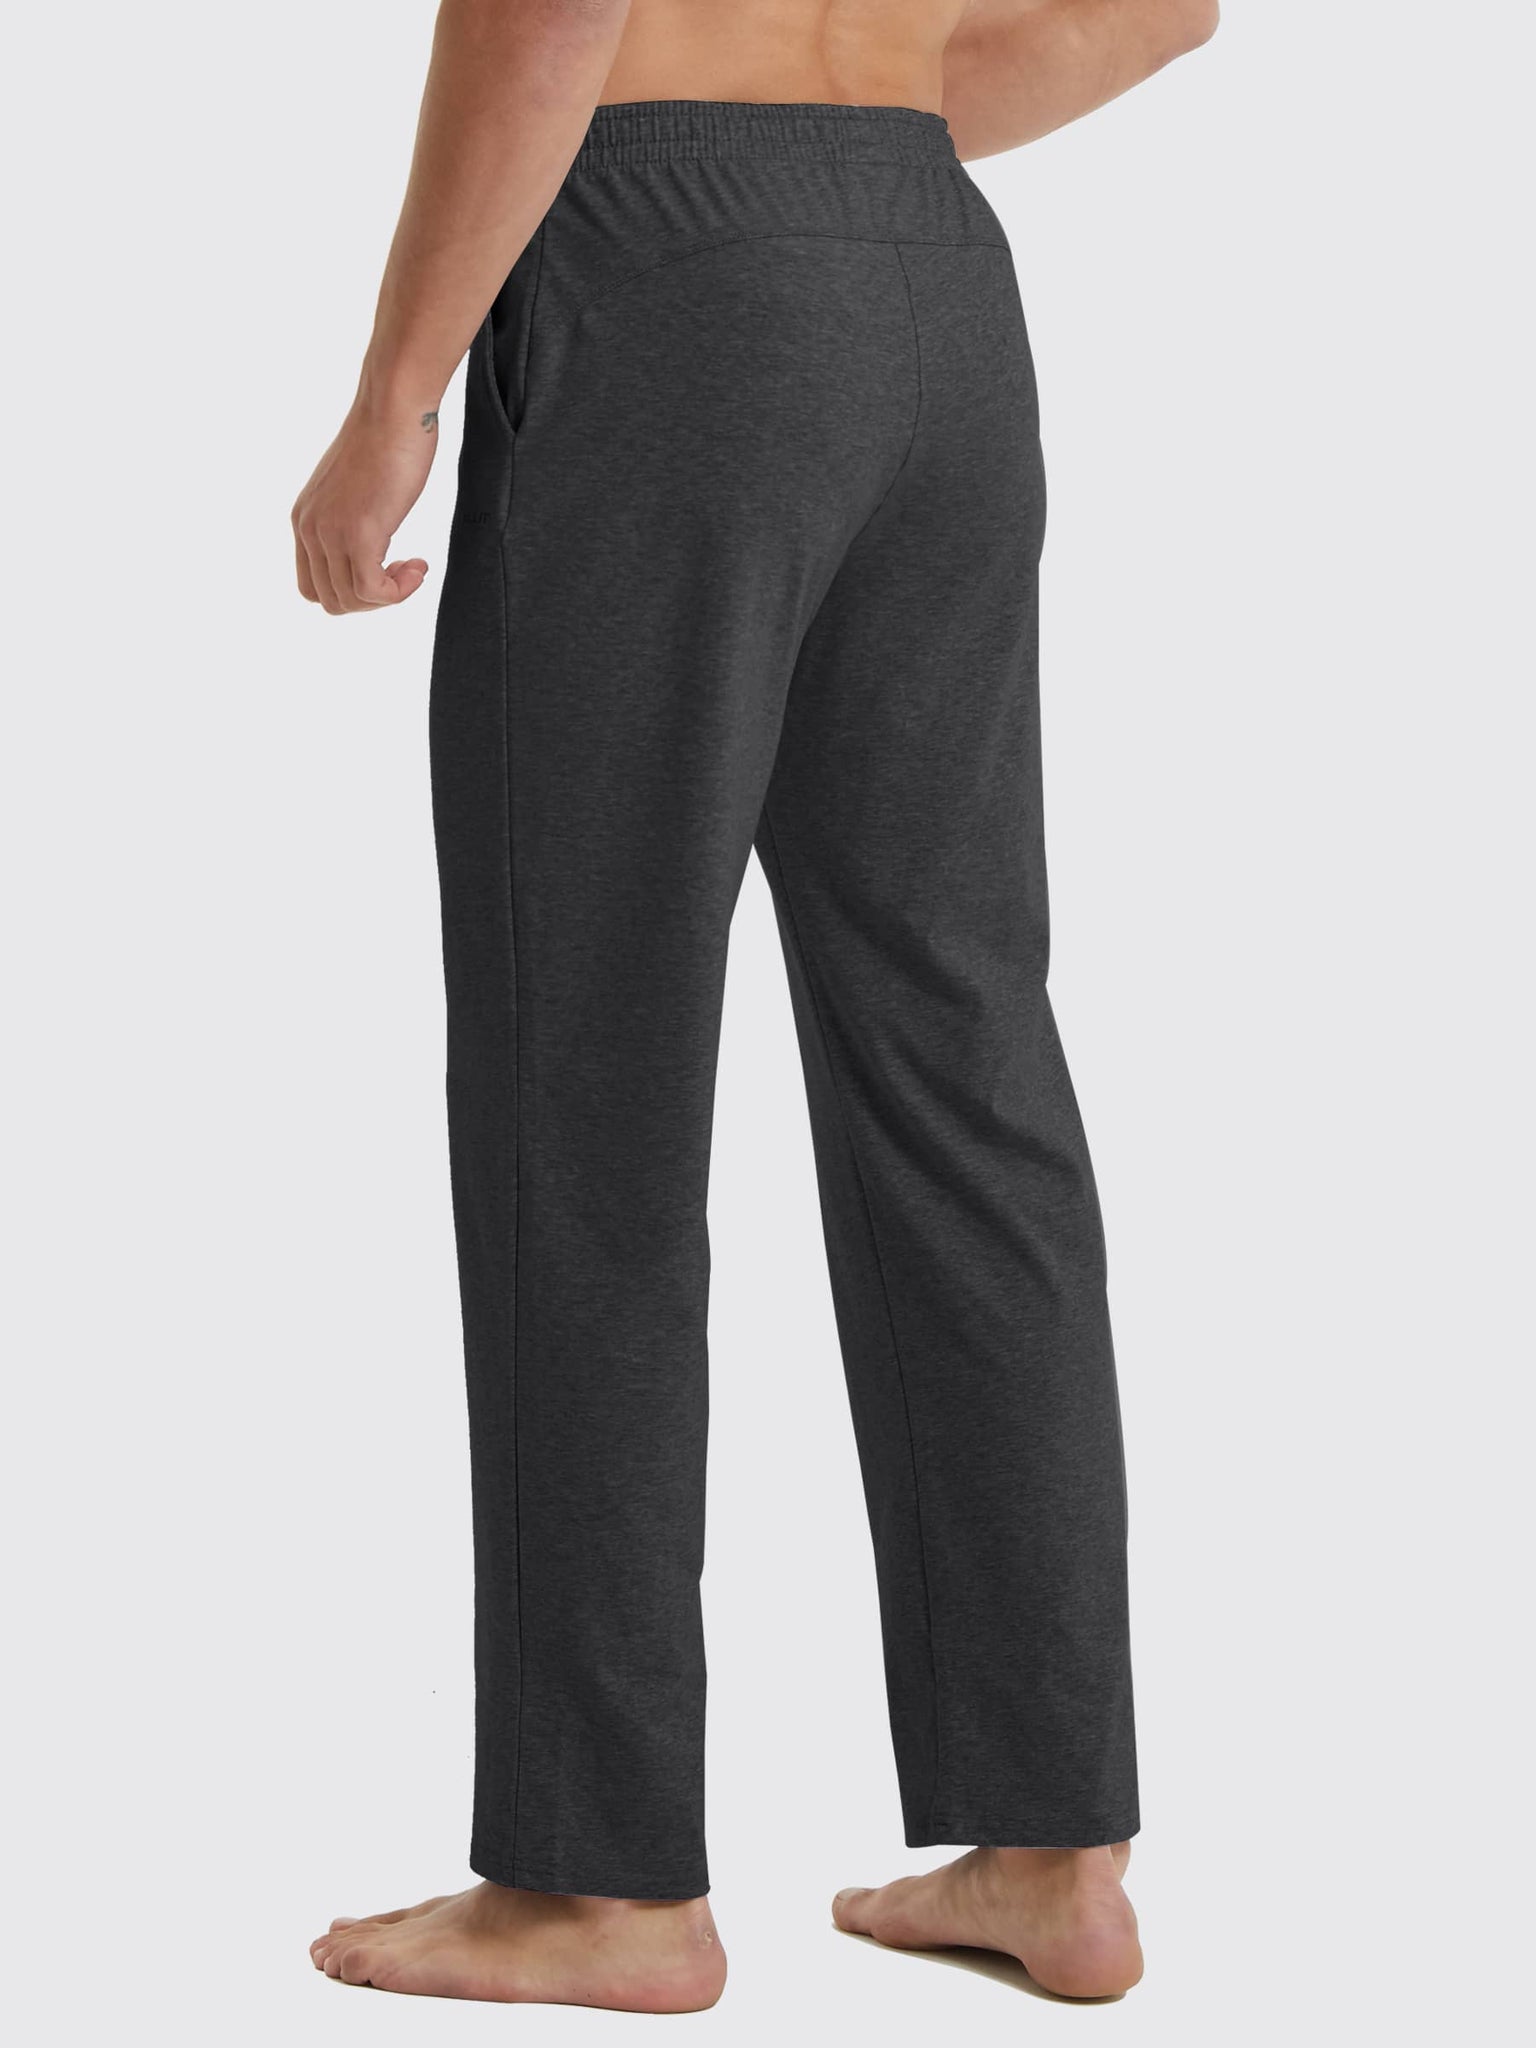 Men's Cotton Yoga Balance Sweatpants_Gray_model3